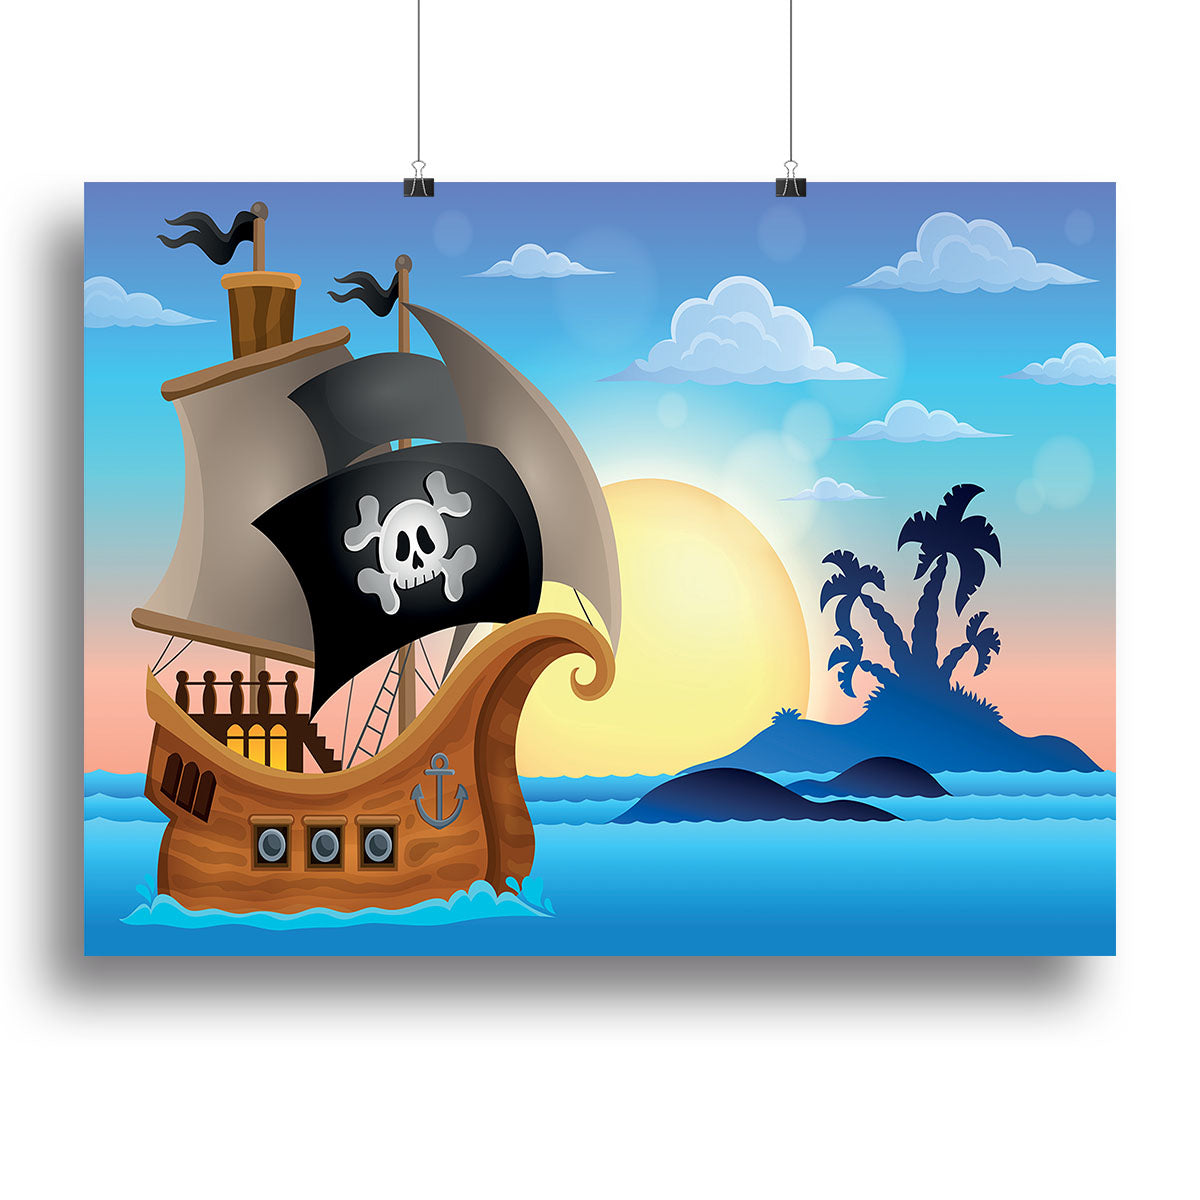 Pirate ship near small island 4 Canvas Print or Poster - Canvas Art Rocks - 2